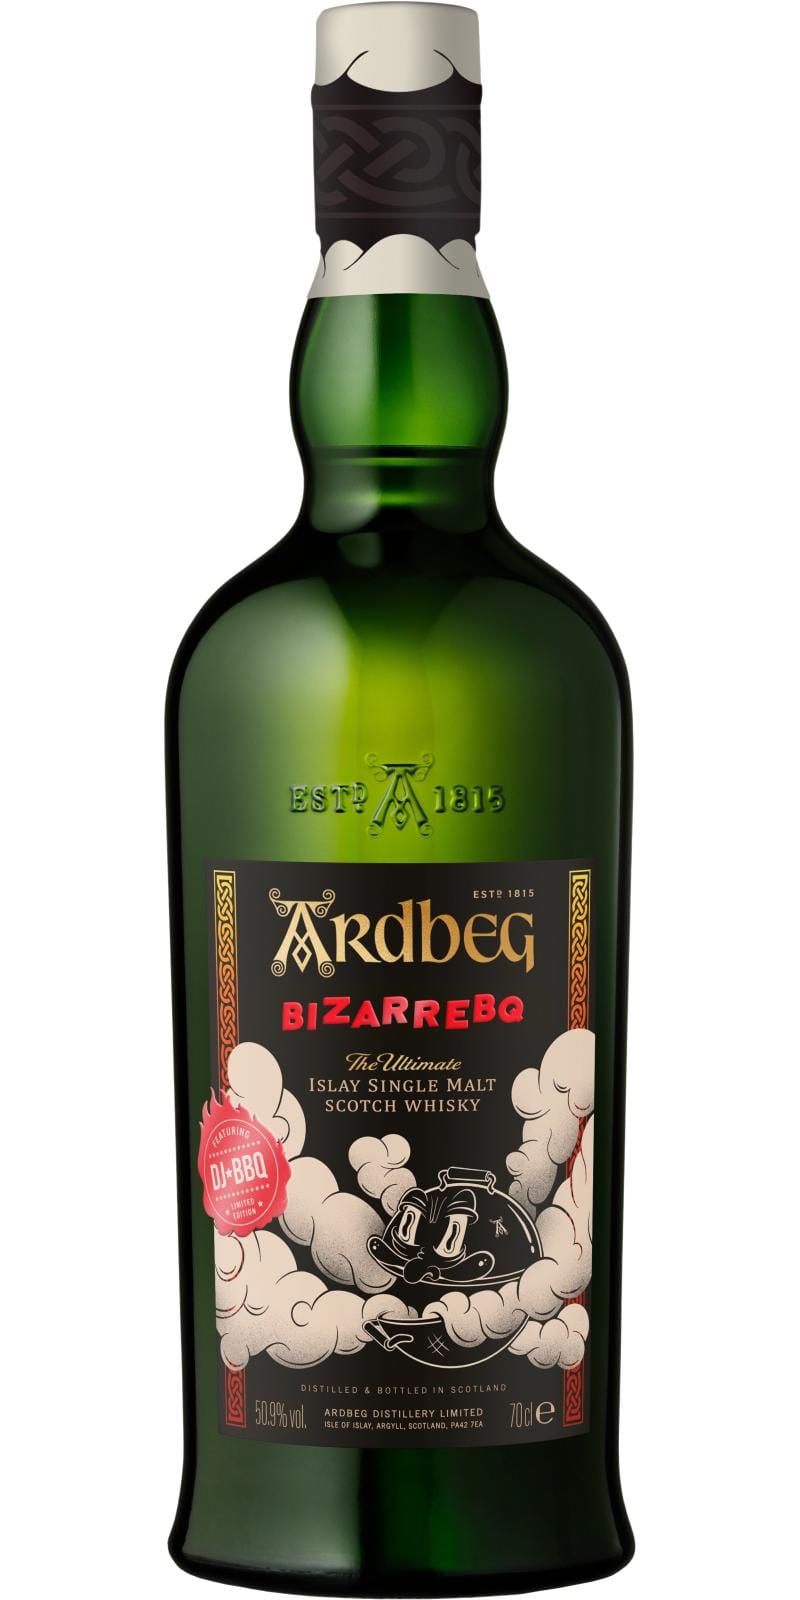 Ardbeg BizarreBQ Limited Edition Single Malt Scotch Whisky 70cl